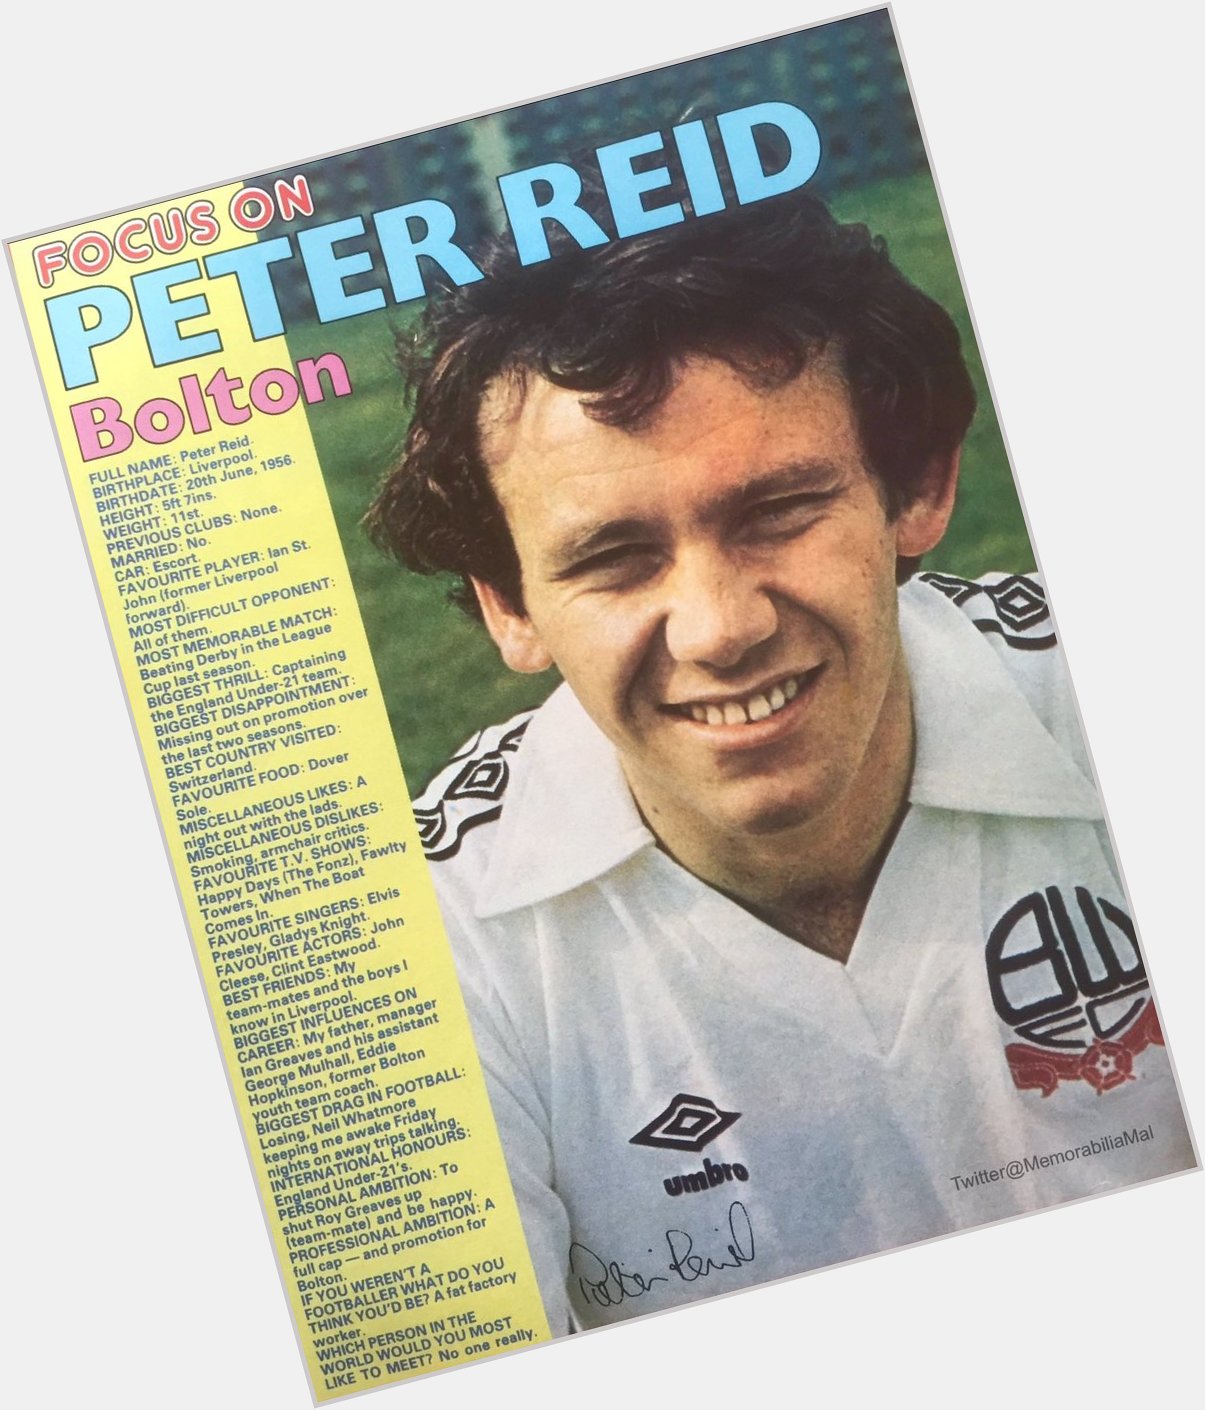 Peter Reid 1977/8
Happy birthday to Peter who was born OTD 20/6/56. 